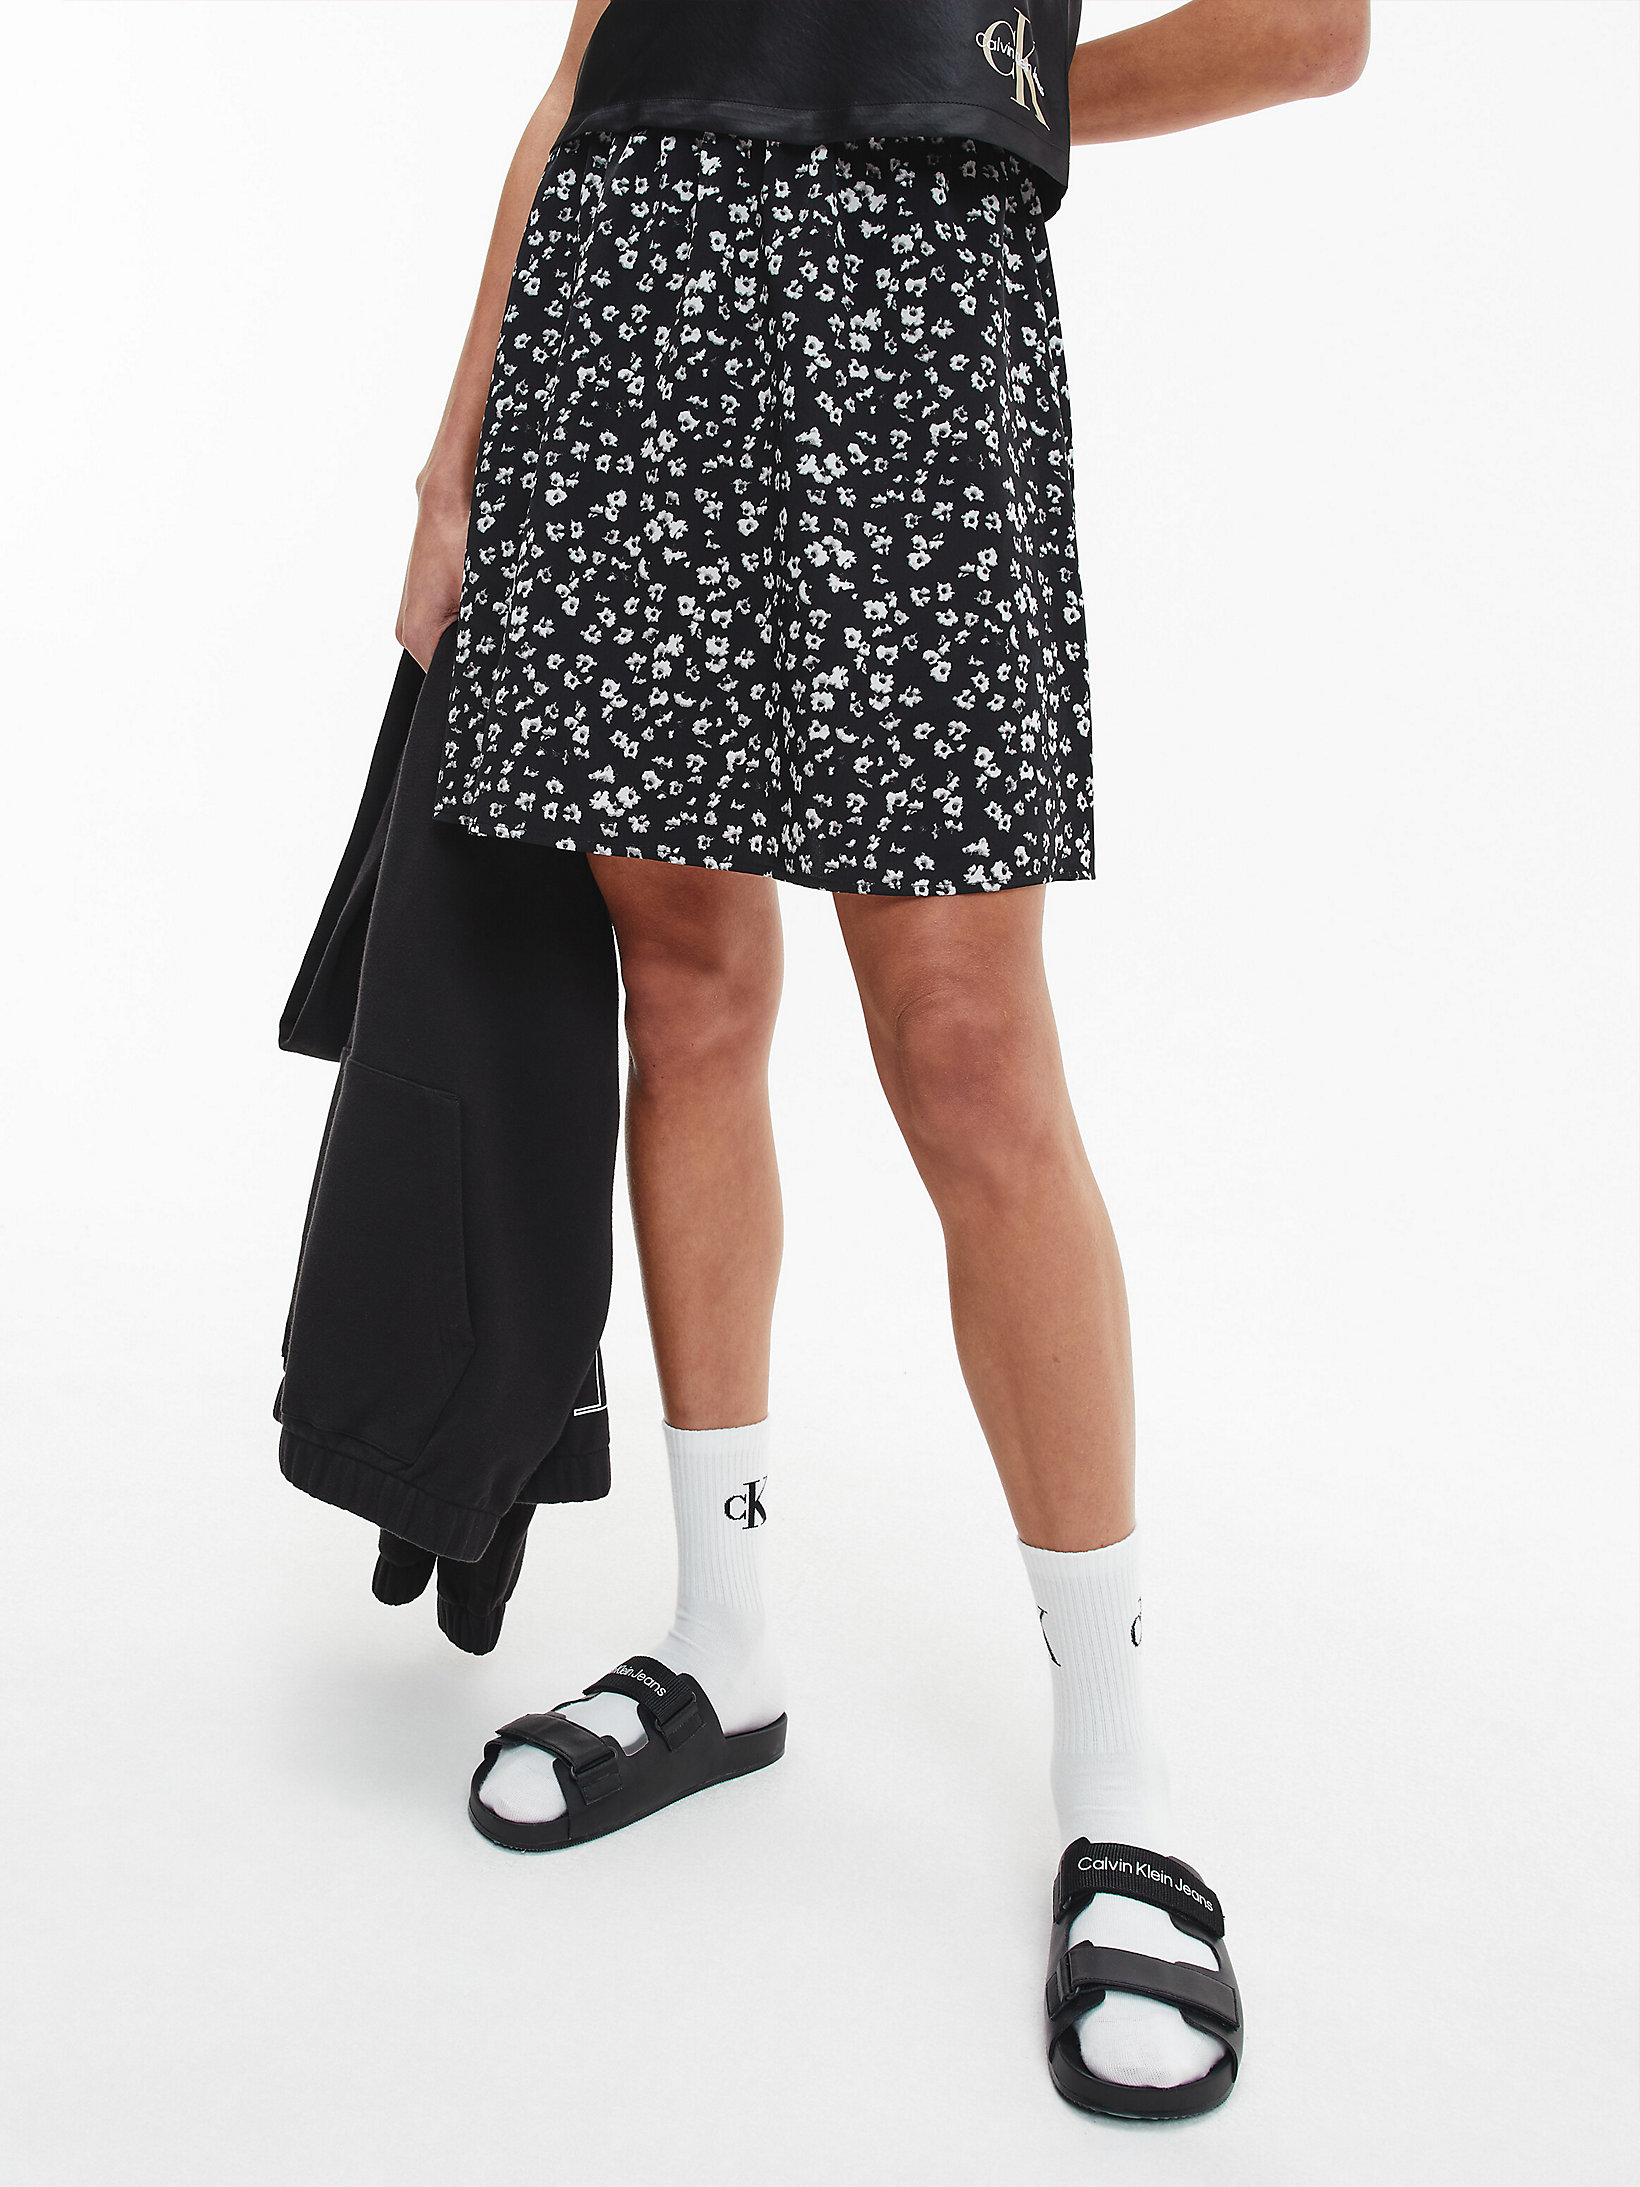 Floral Aop CK Black/bright White > Мини-юбка с логотипом на поясе из переработанного матери > undefined Женщины - Calvin Klein